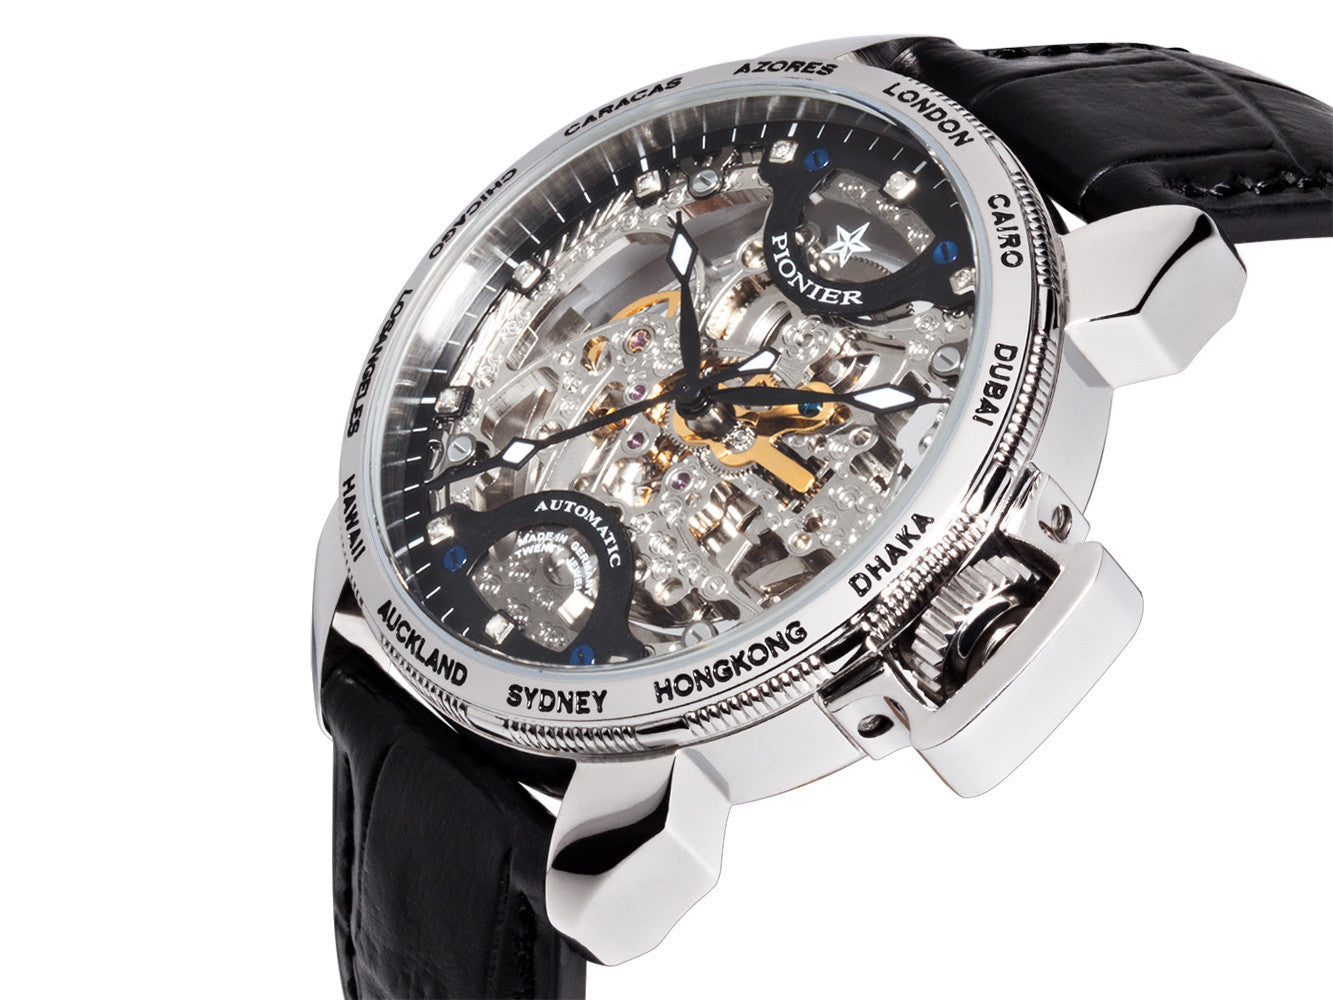 Sydney Pionier GM-503-2 Made in Pionier Germany – Watches